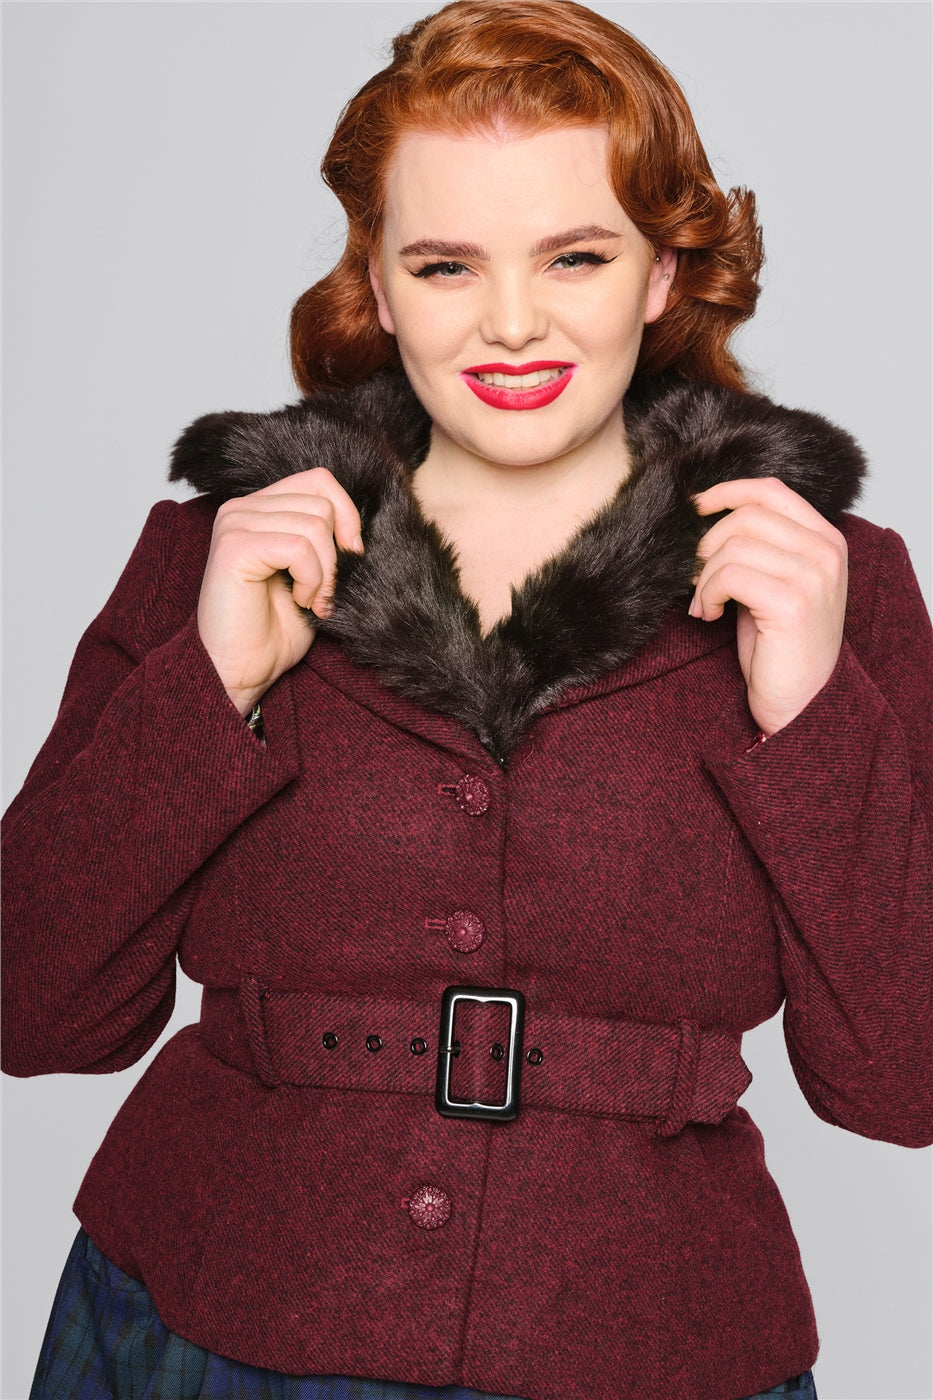 Smiling redhead model holding the fur trim collar on her burgundy jacket